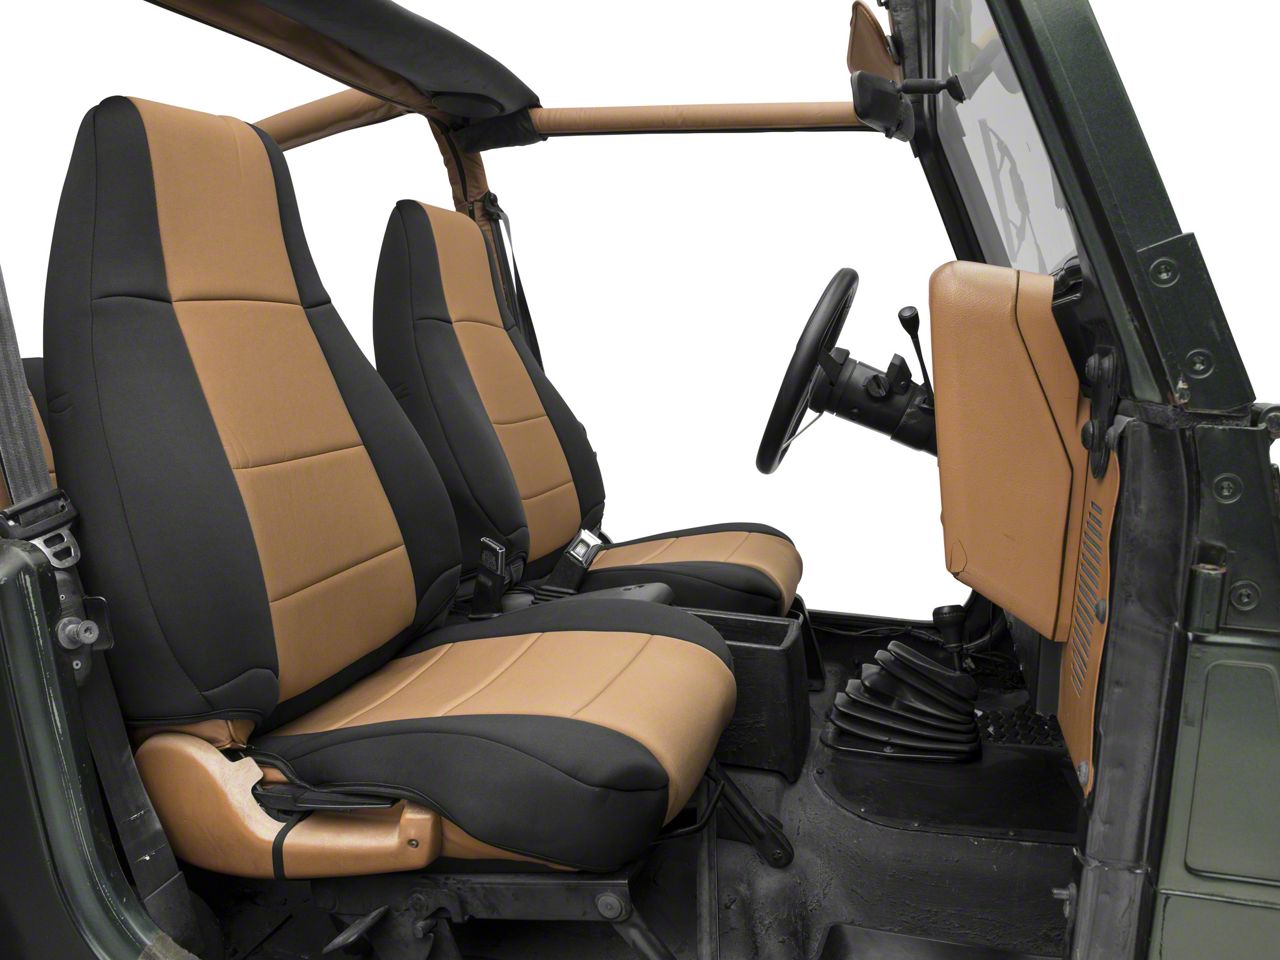 Smittybilt Jeep Wrangler Neoprene Seat Cover Set Front Rear Tan J103859 87 95 Yj - Jeep Tj Seat Covers Tan